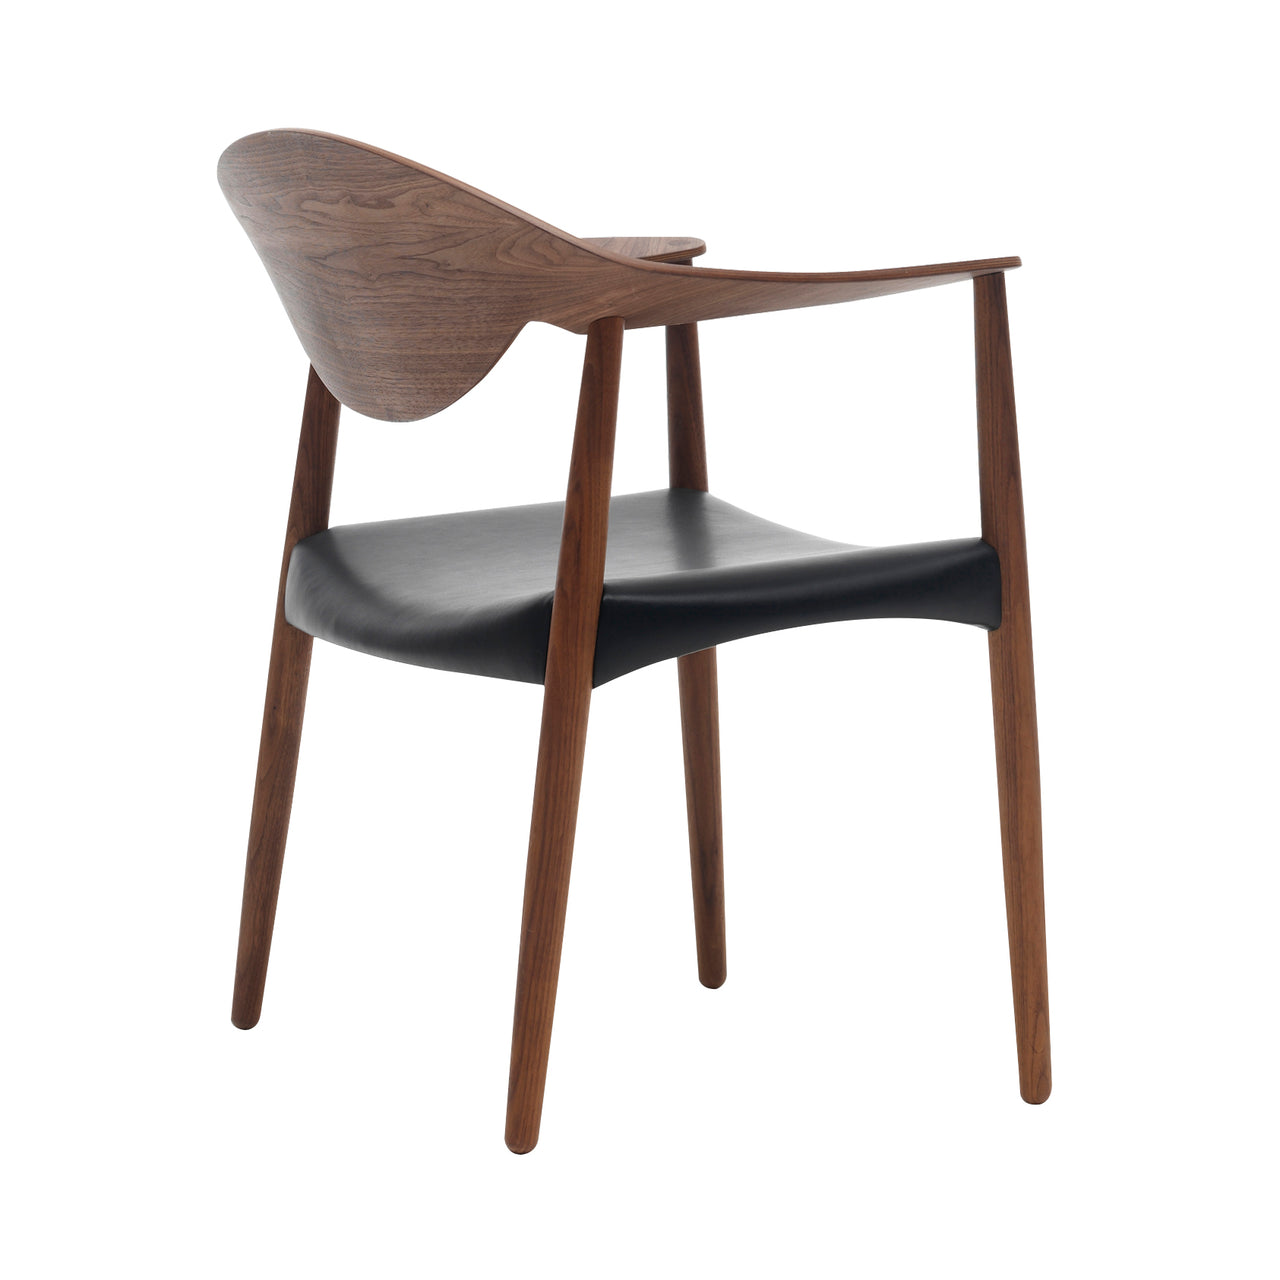 LM92T Metropolitan Chair: Oiled Walnut